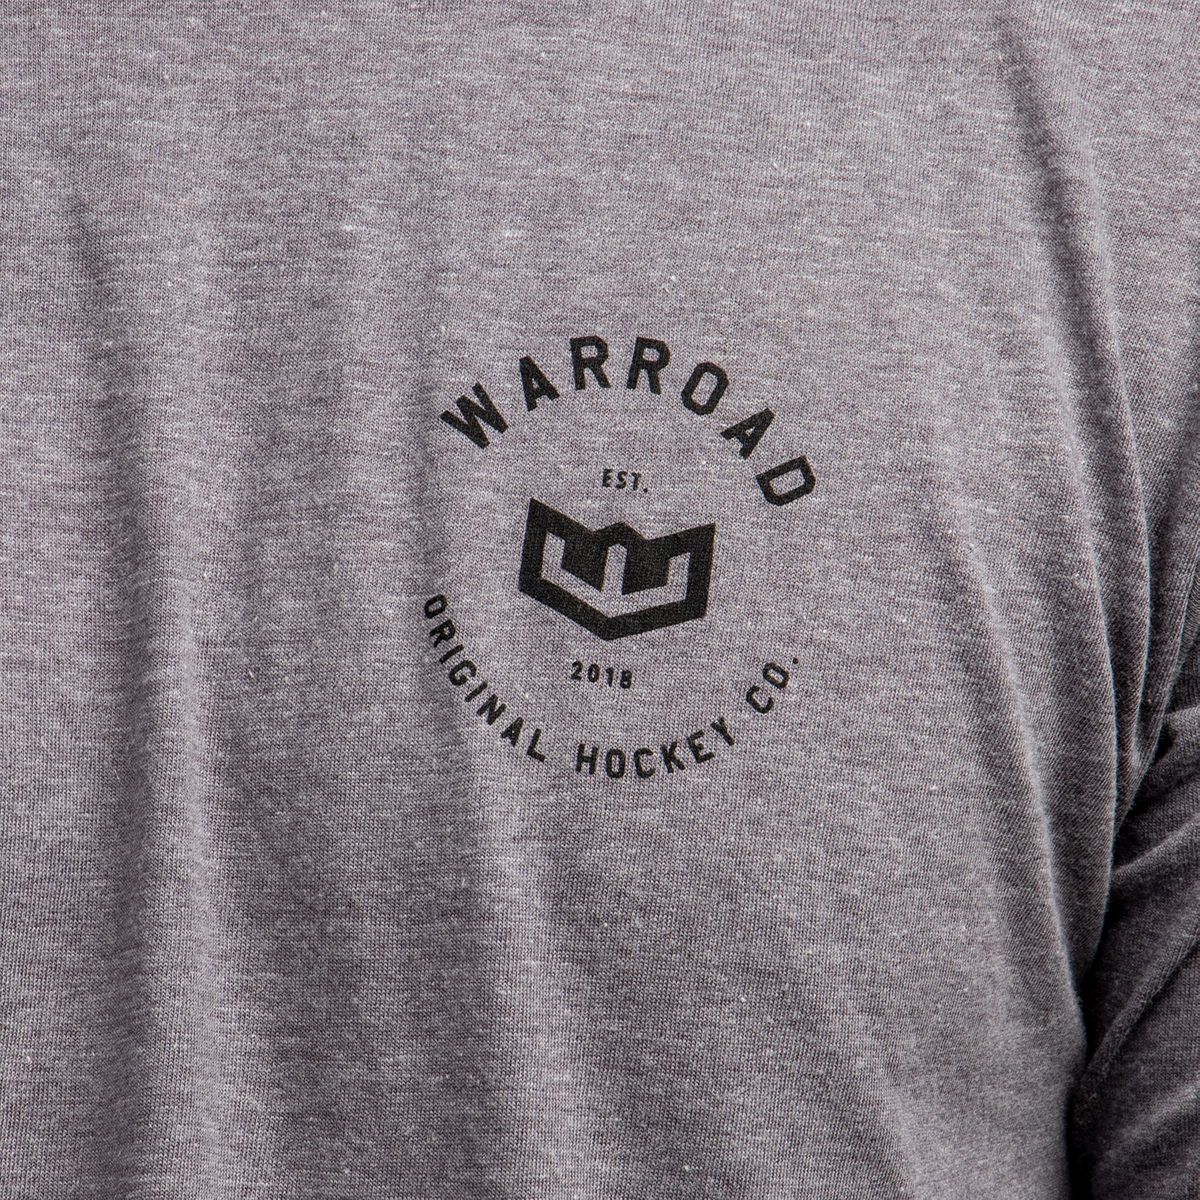 City Series T-Shirt - Warroad